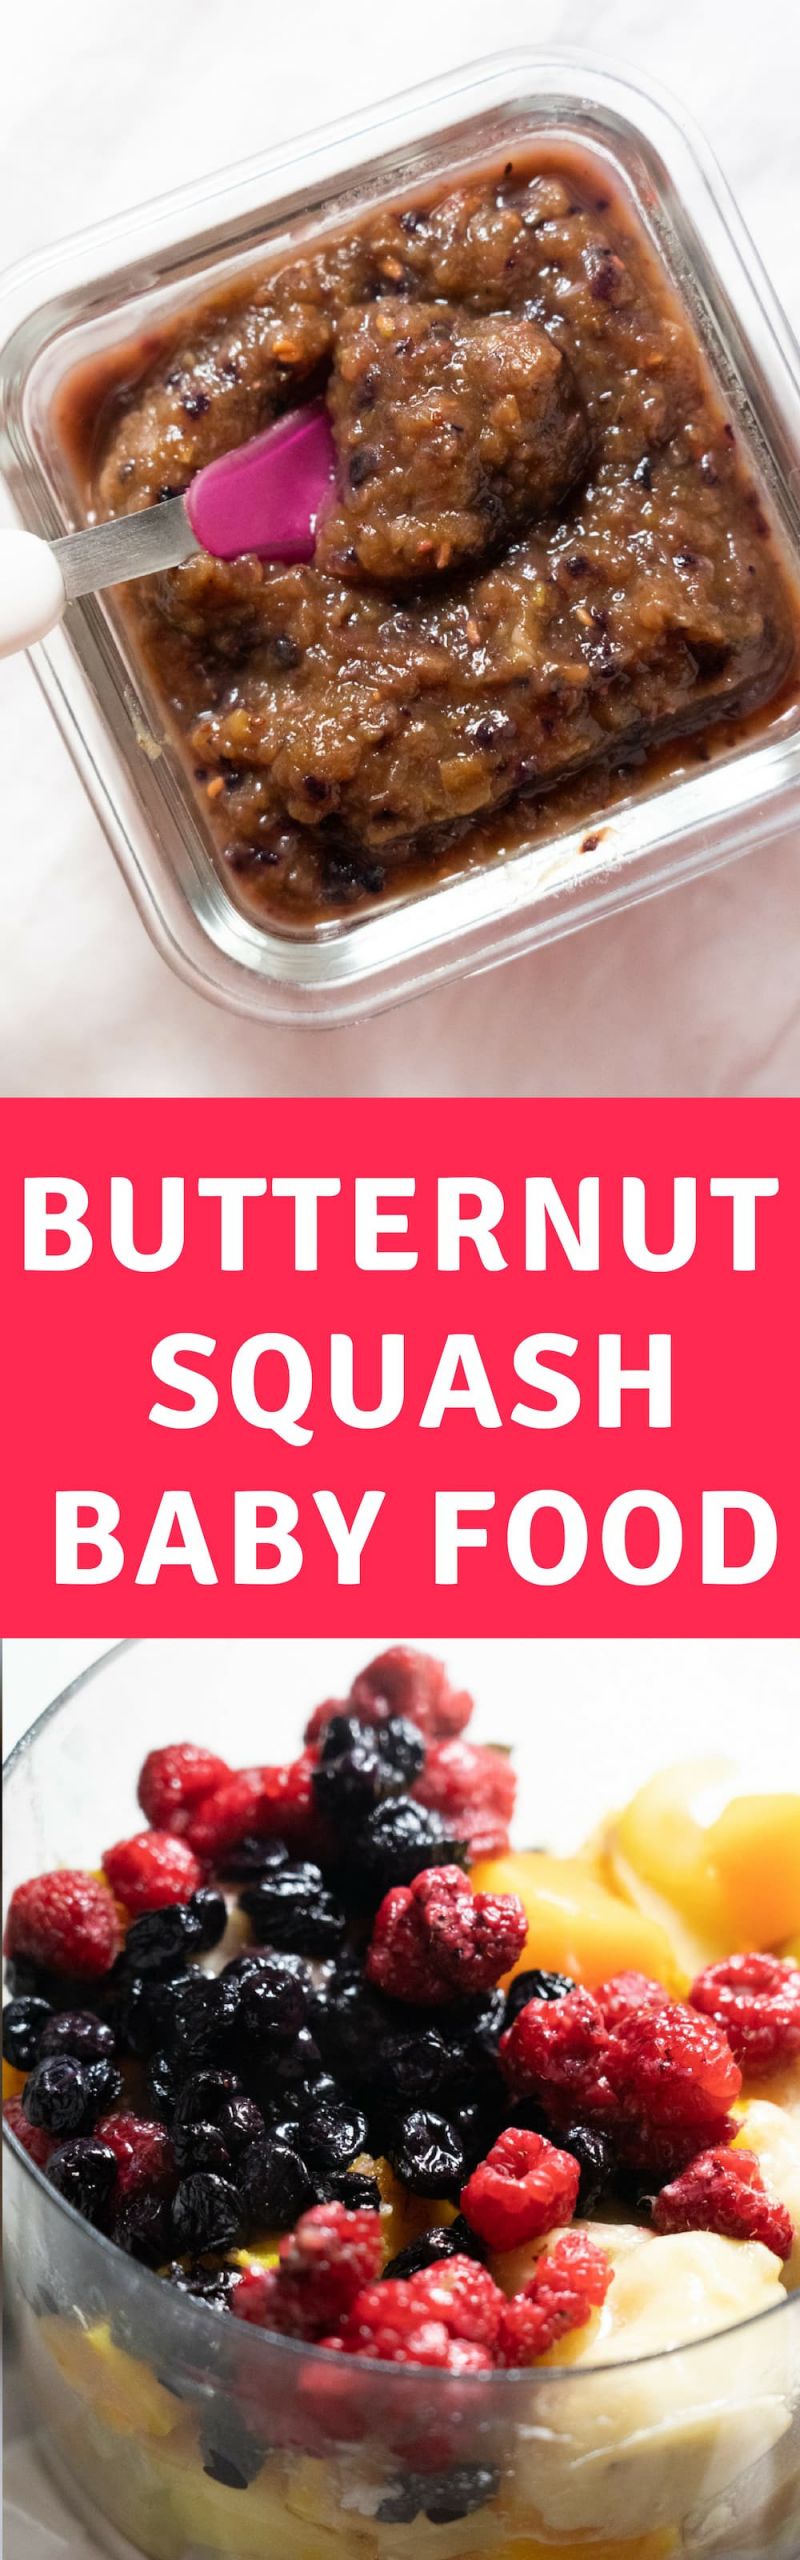 Butternut Squash Baby Food Recipe
 Butternut Squash Baby Food Recipe Easy With Fruits and